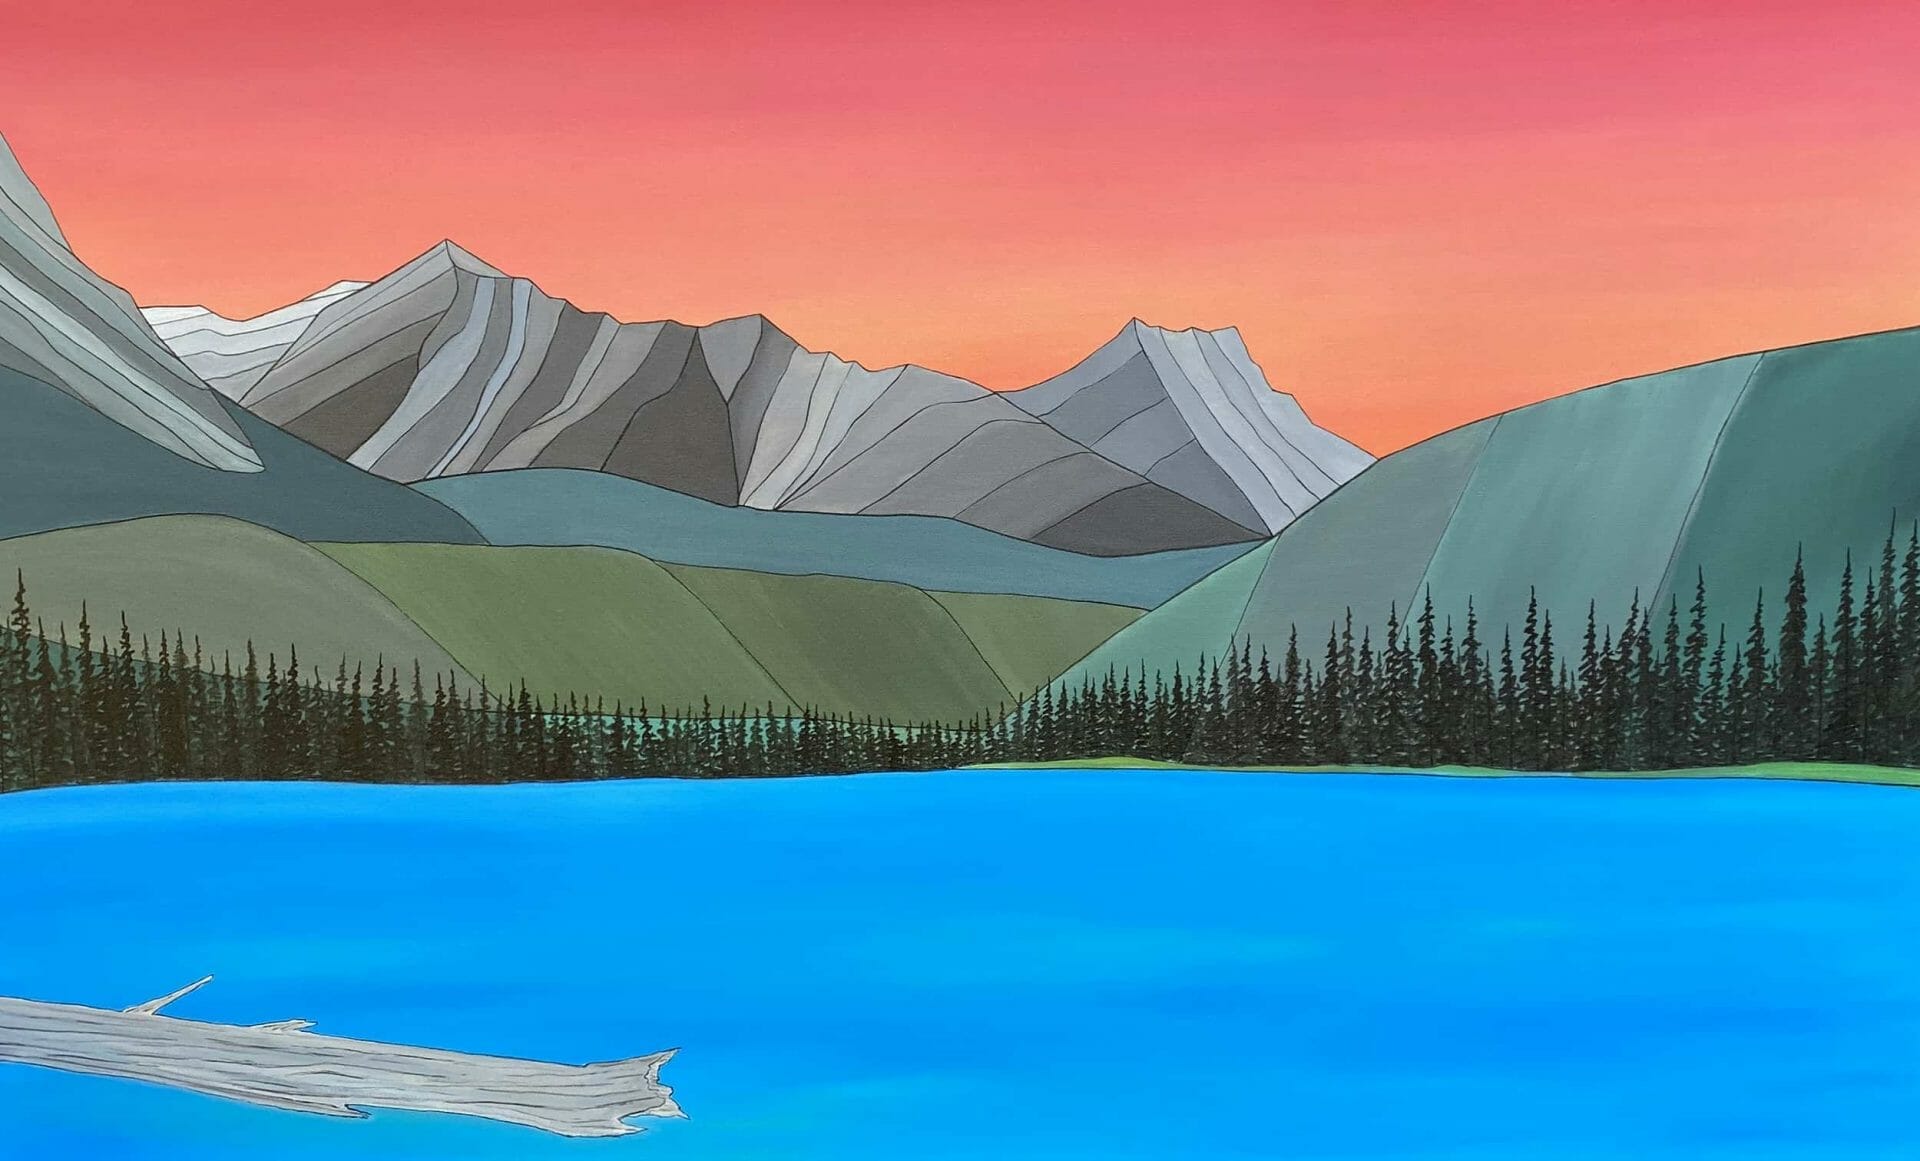 Chinook Lake Celebration - Canadian Original Artwork For Sale by BJ Sosa - Calgary, AB Local Artist - Mountains